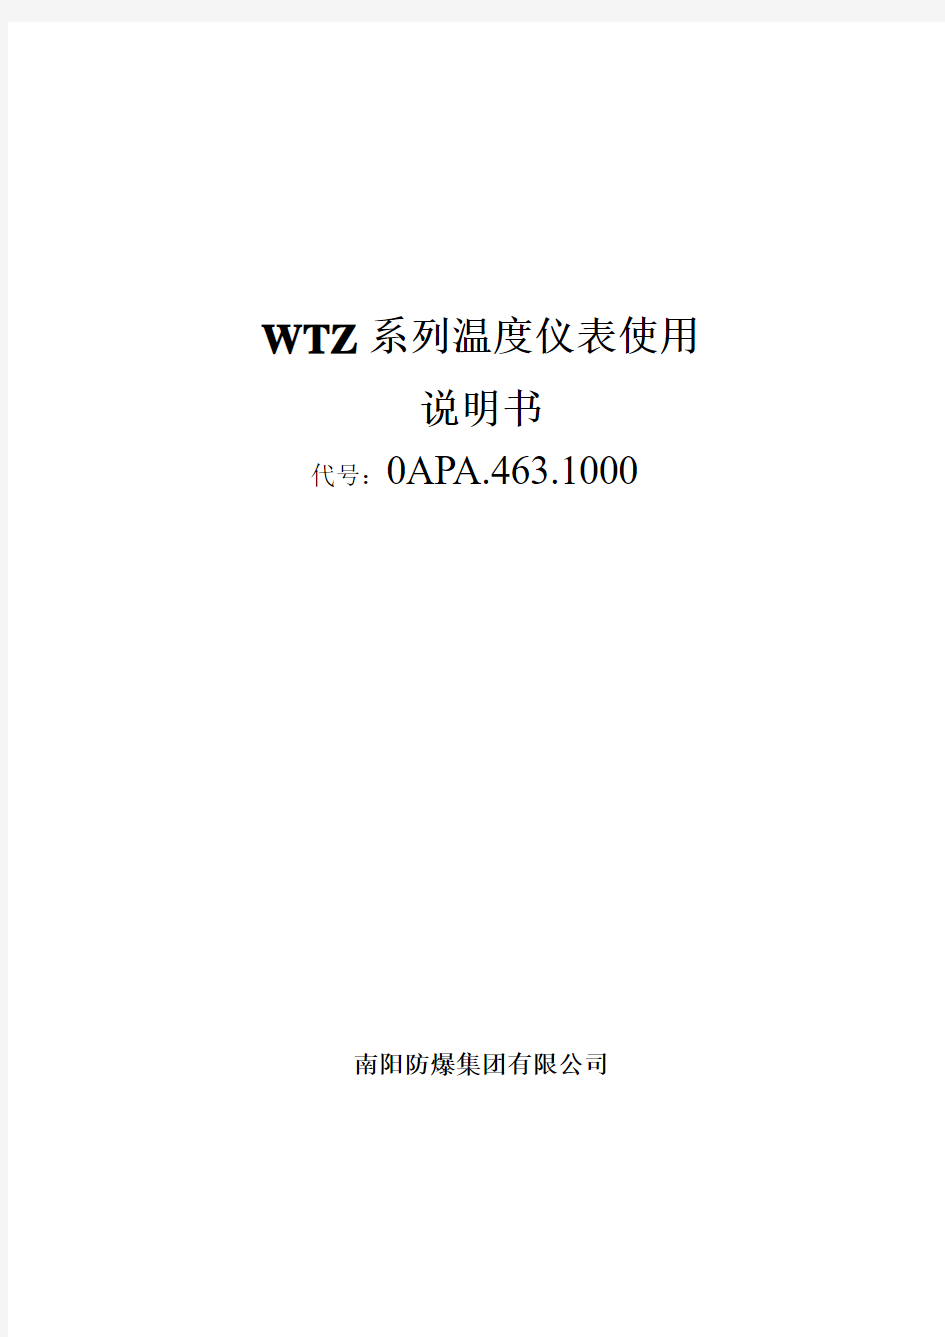 WTZ系列温度仪表使用说明书(草稿)